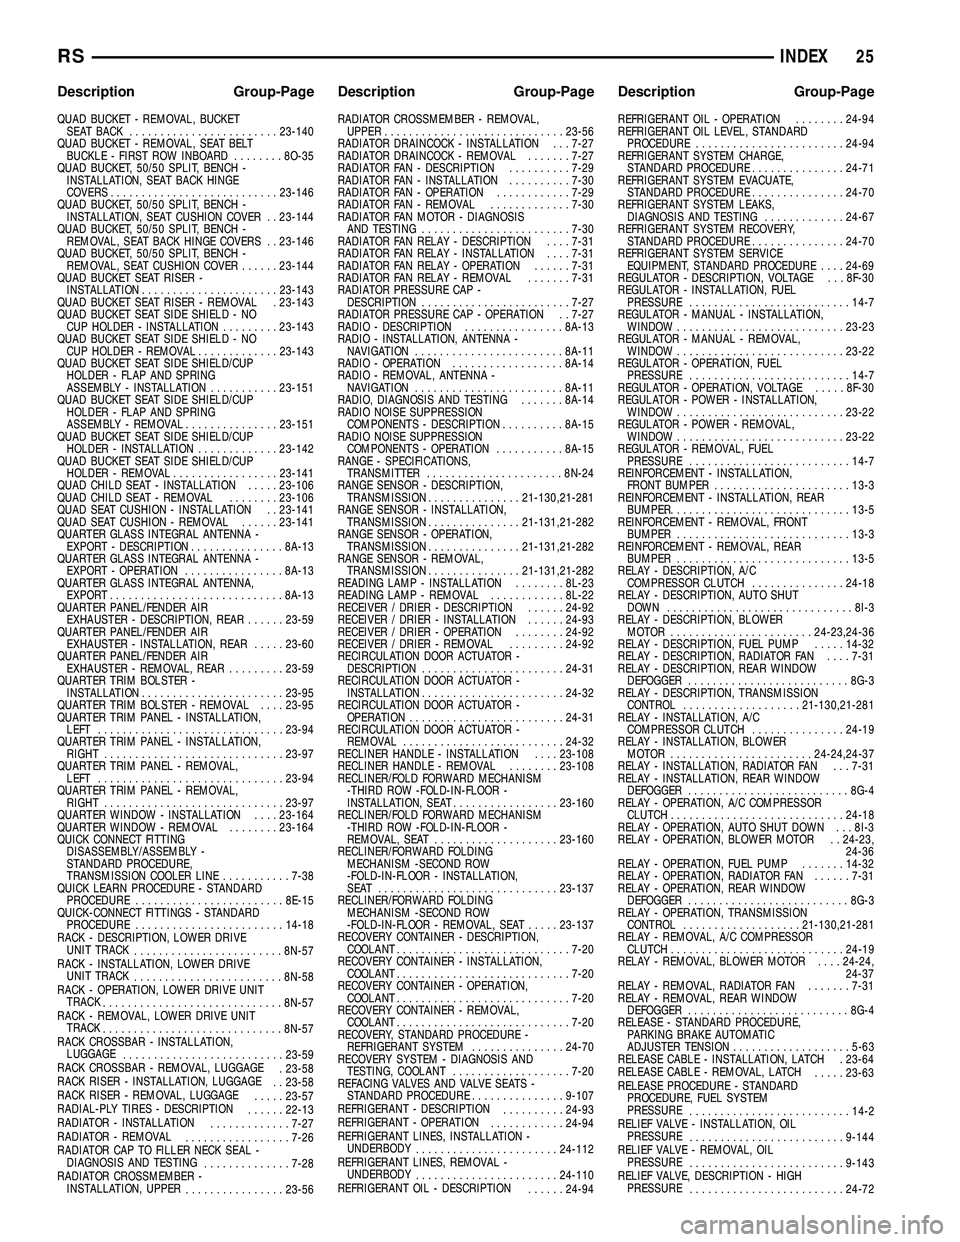 CHRYSLER CARAVAN 2005 Manual PDF QUAD BUCKET - REMOVAL, BUCKETSEAT BACK ........................ 23-140
QUAD BUCKET - REMOVAL, SEAT BELT BUCKLE - FIRST ROW INBOARD ........8O-35
QUAD BUCKET, 50/50 SPLIT, BENCH - INSTALLATION, SEAT BA